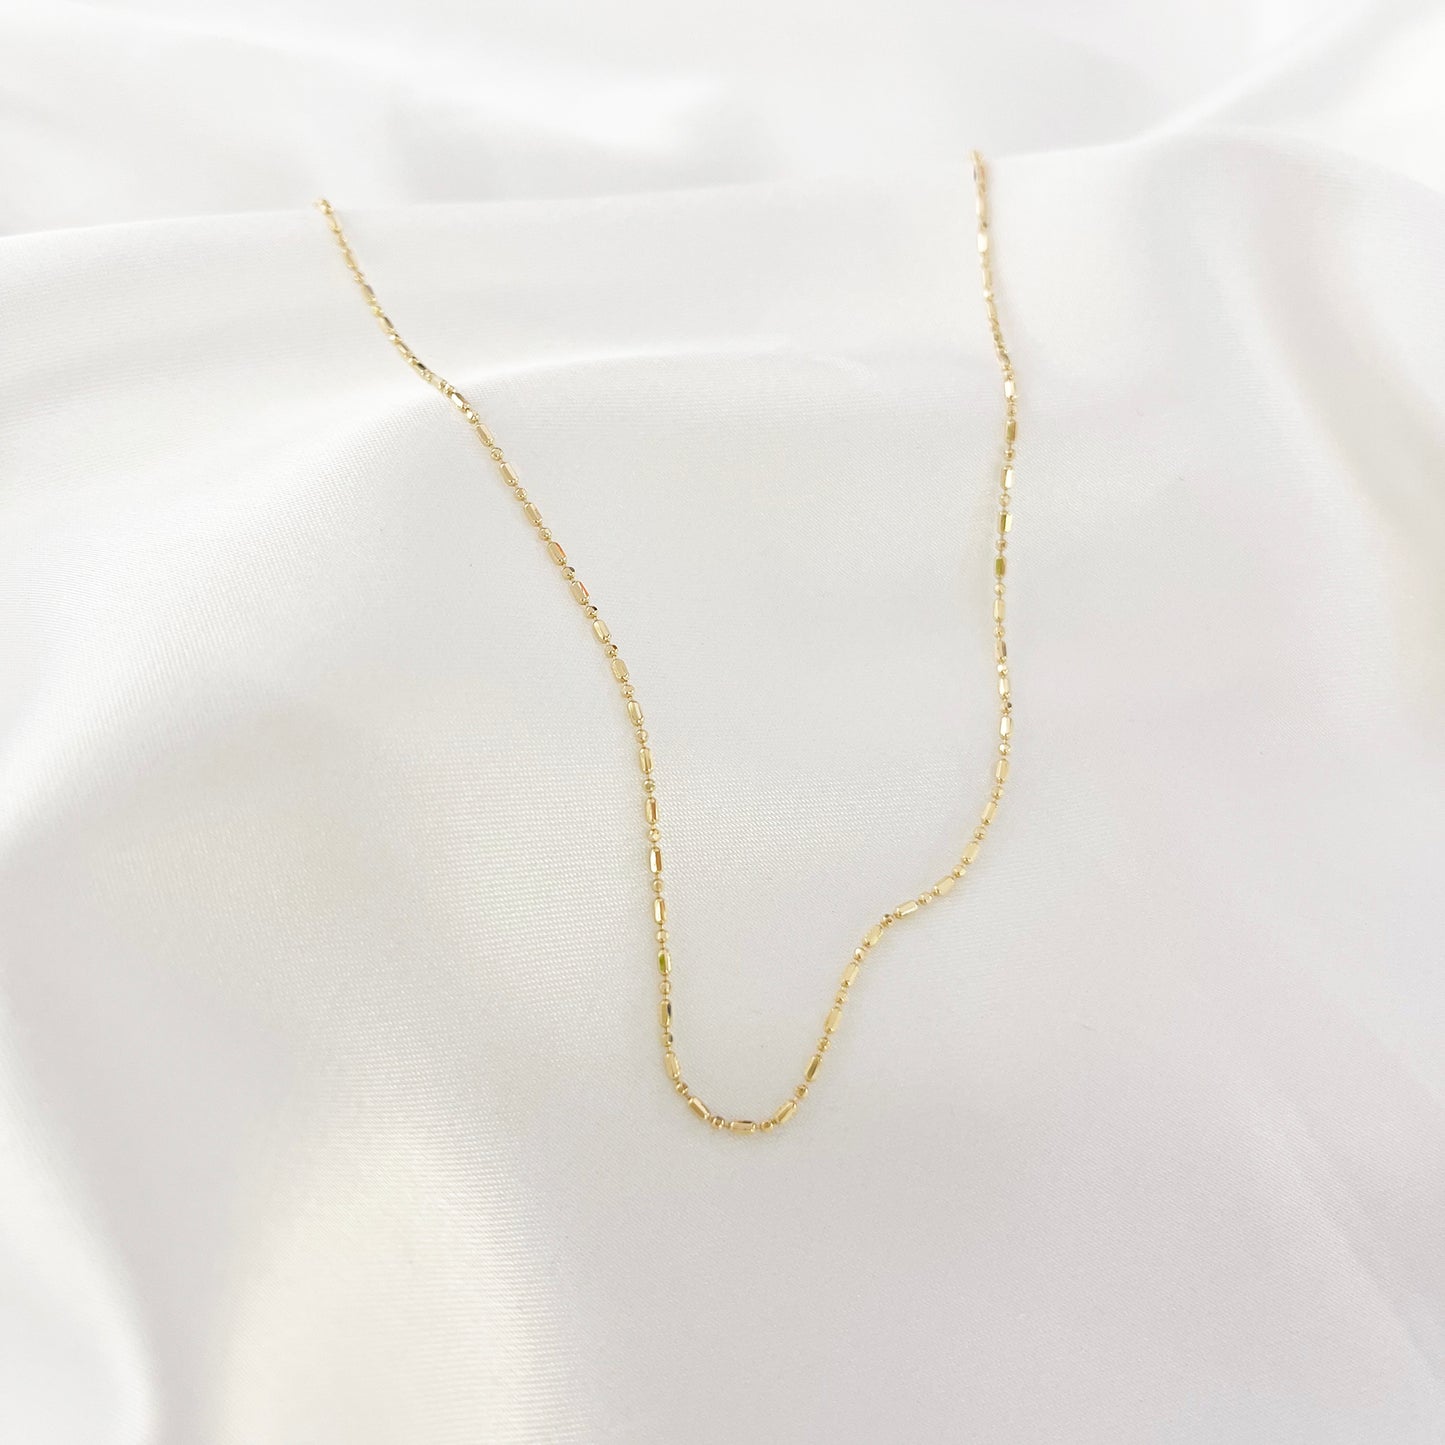 18k黃金迷你筒裝頸鏈 18k Yellow Gold Adjustable Necklace